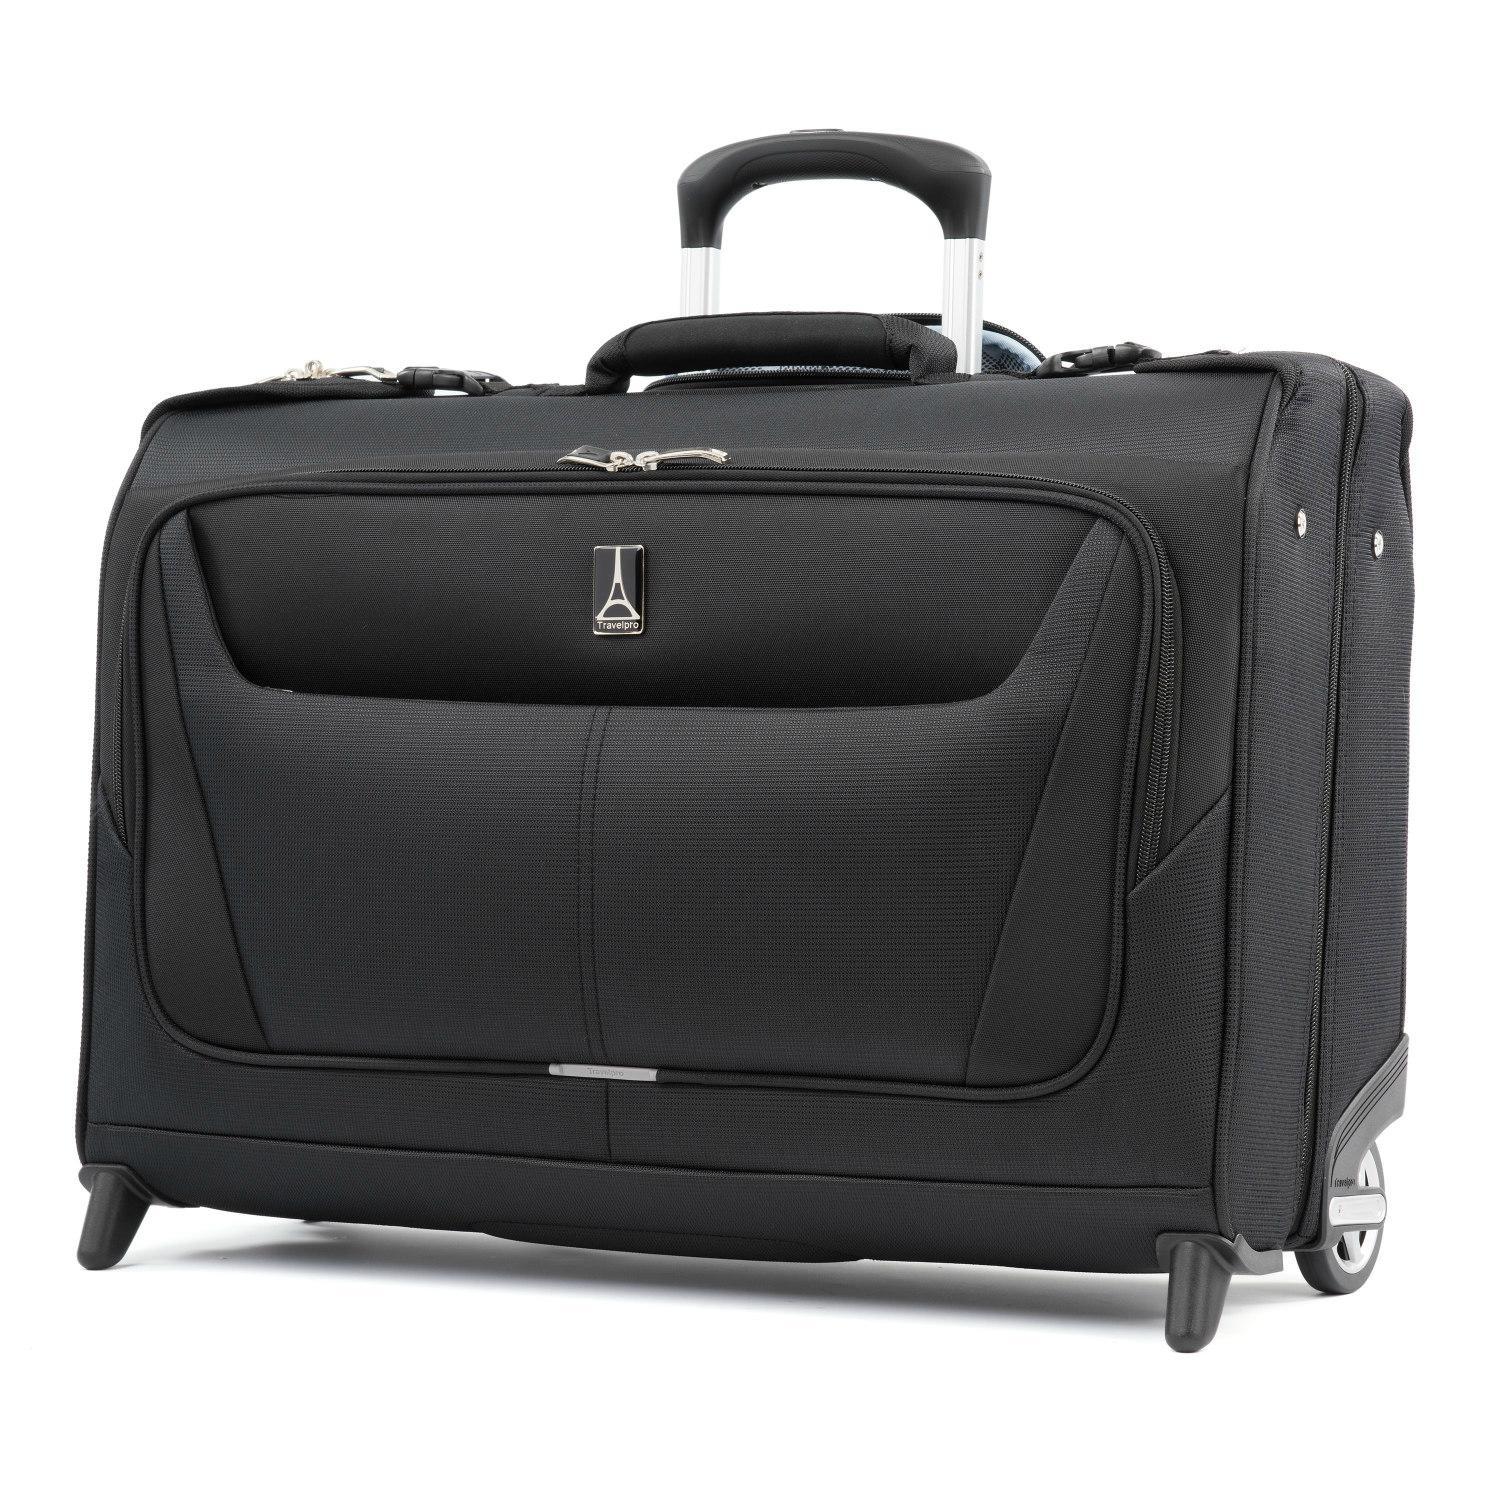 Travelpro Maxlite 5 Carry On Rolling Garment Bag - Black